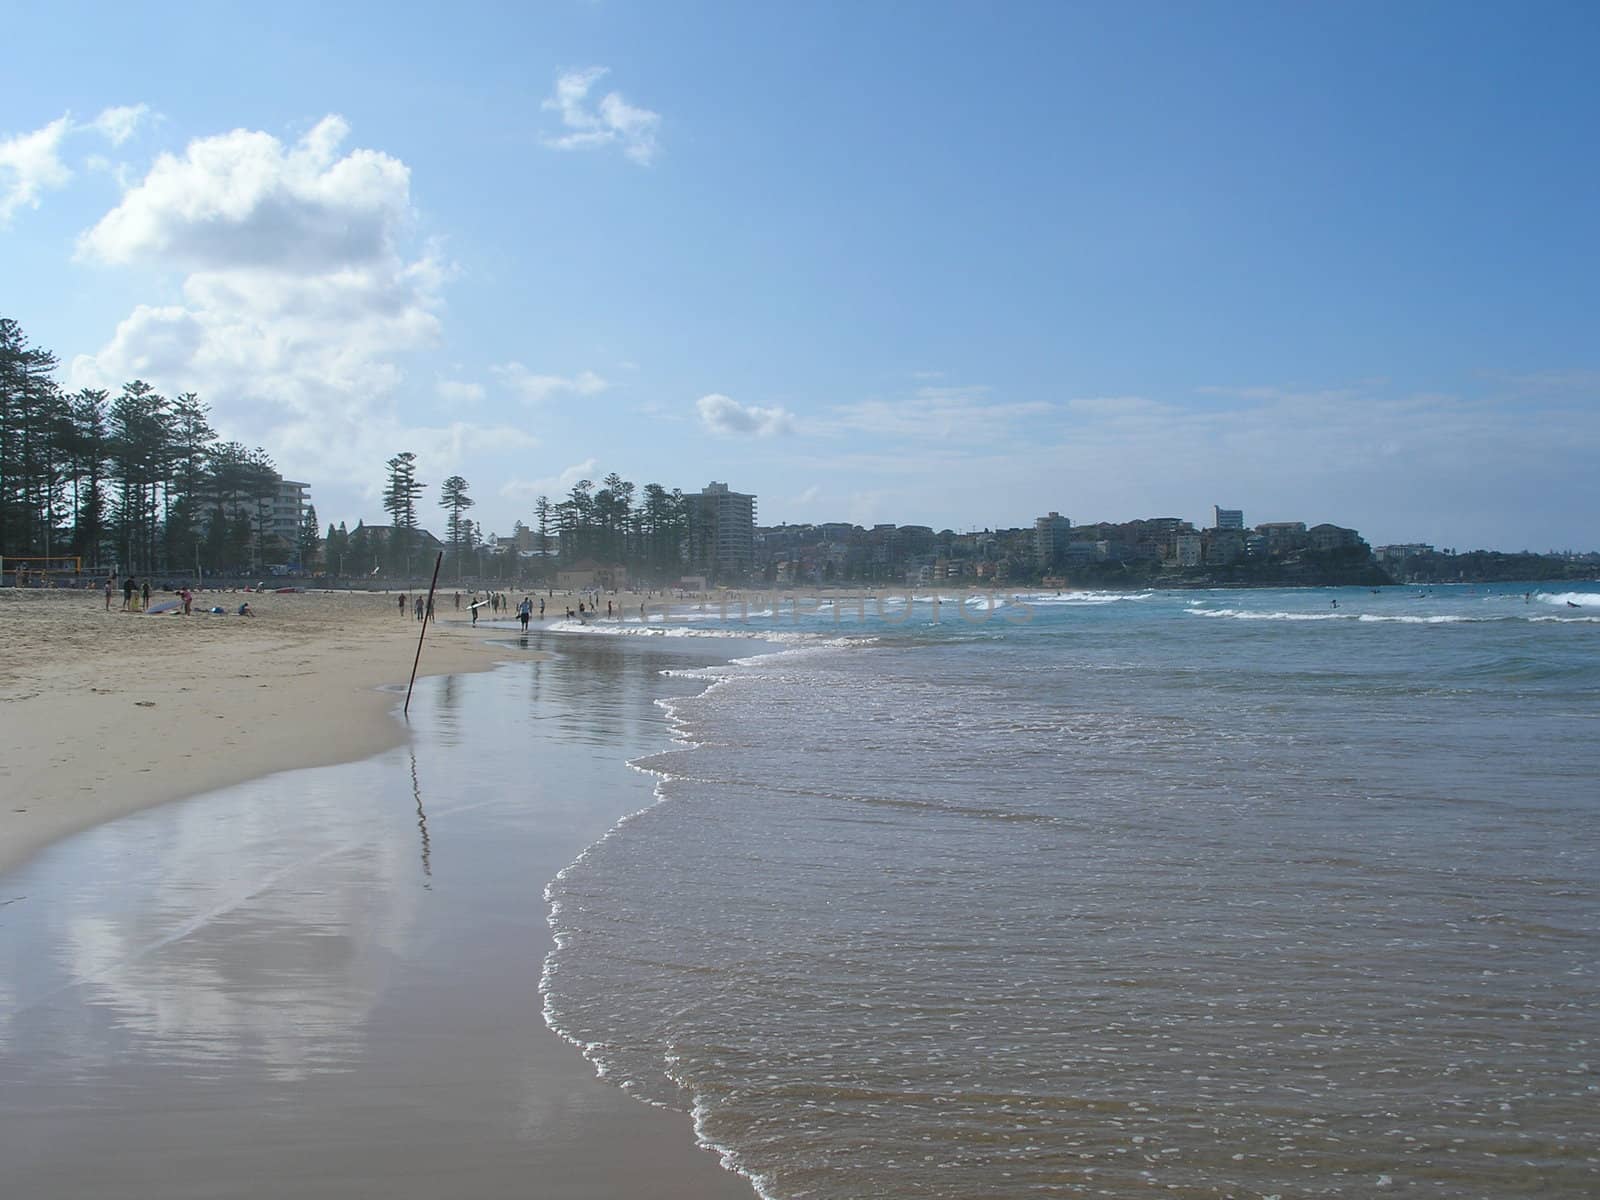 Manly Beach, Sydney